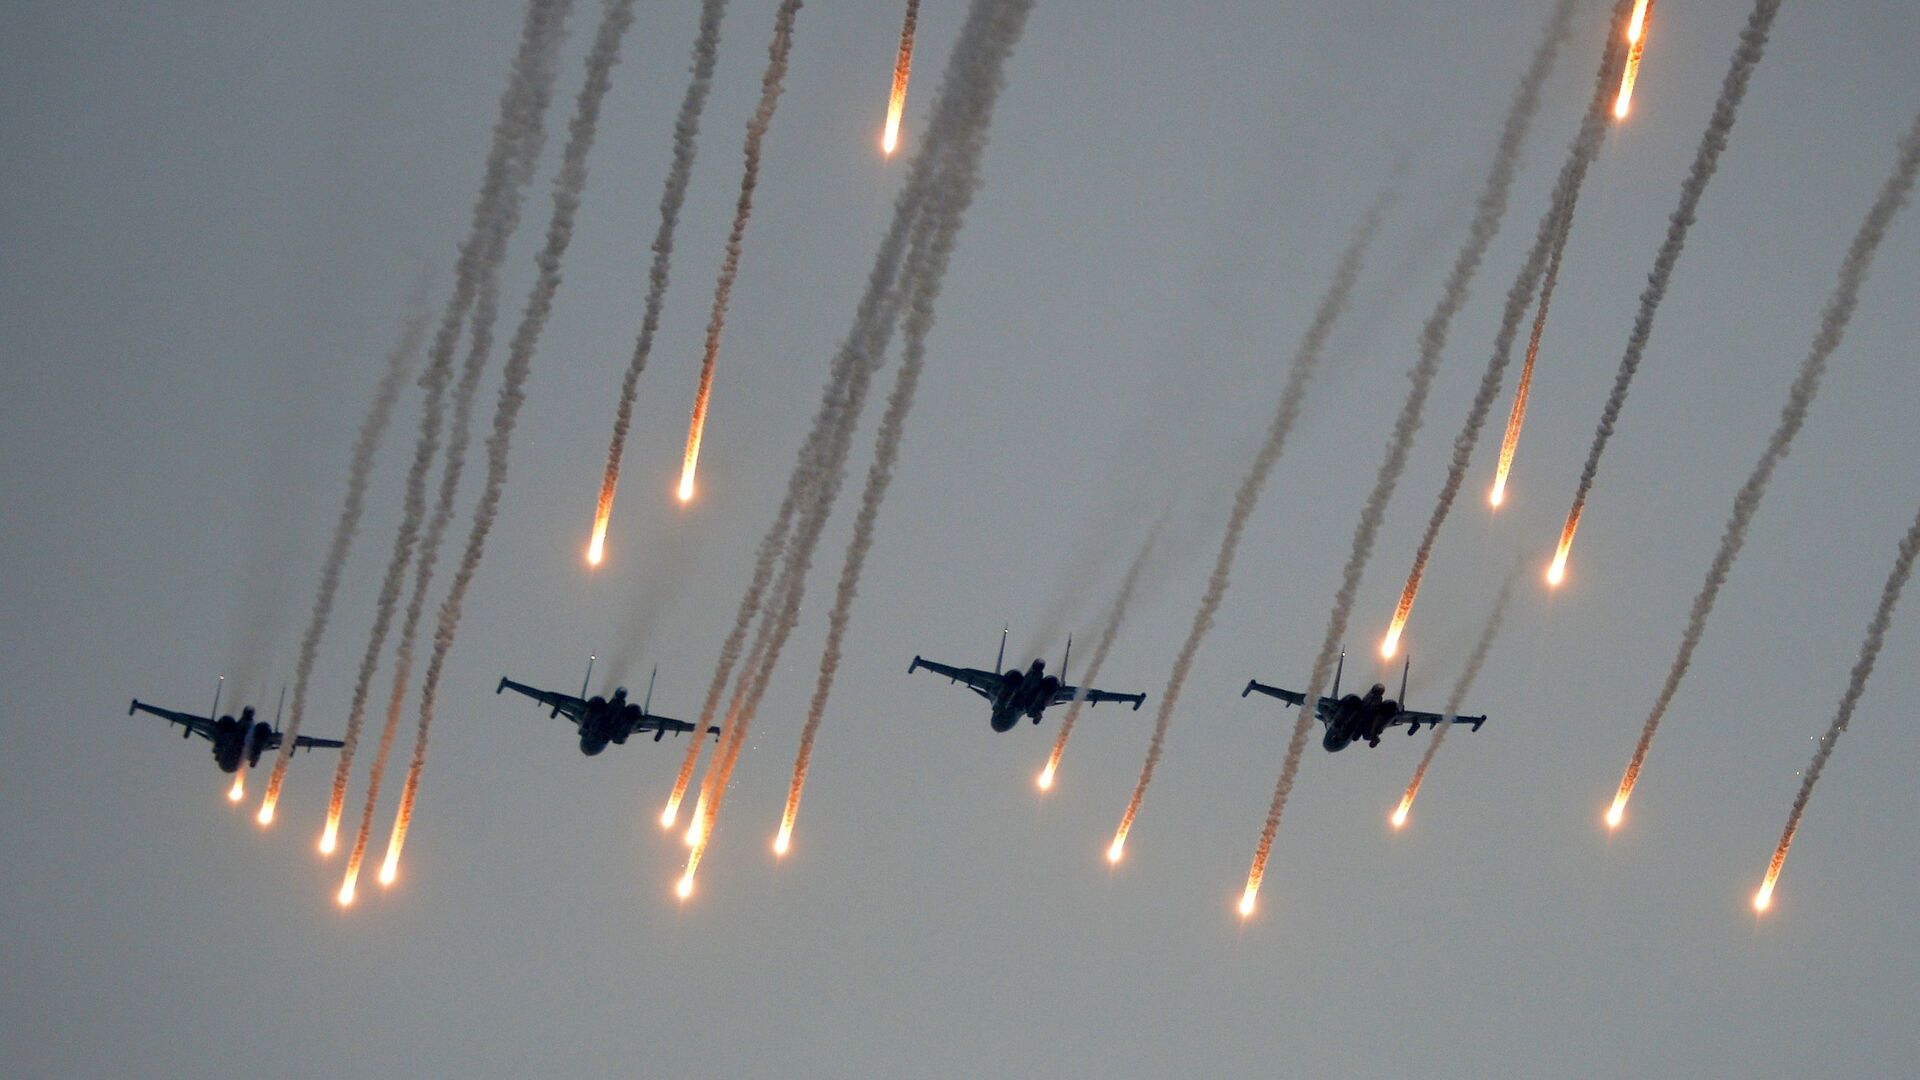 Lėktuvai danguje virš treniruočių aikštelės Minsko srityje - Sputnik Lietuva, 1920, 09.08.2021